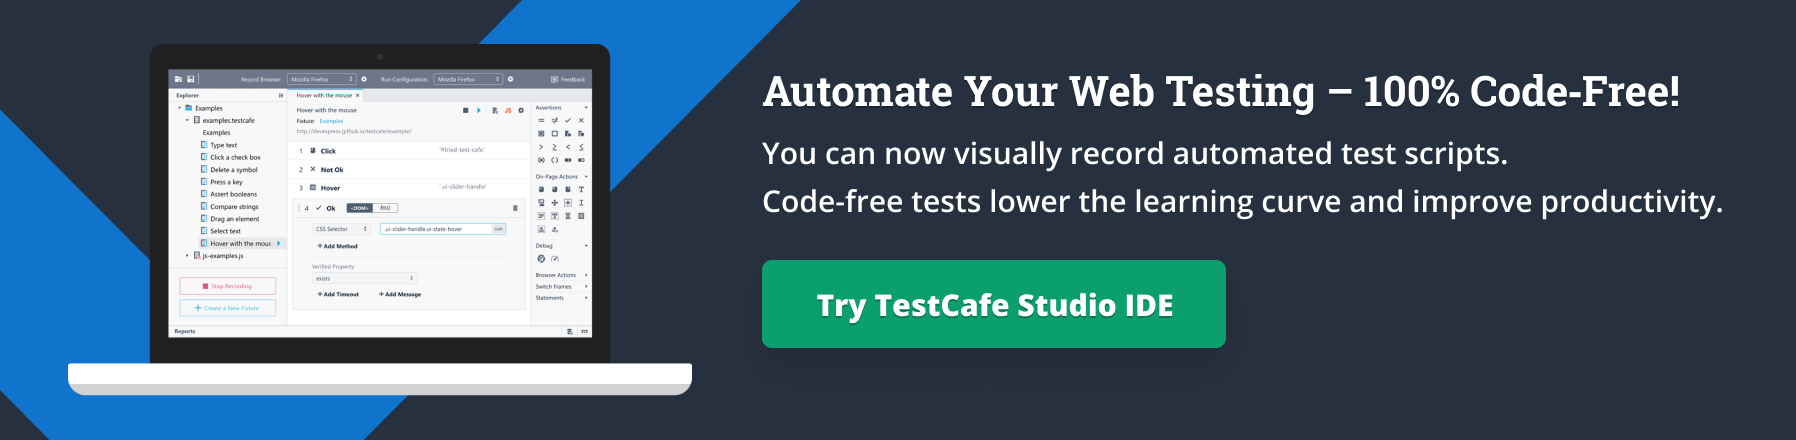 Try TestCafe Studio IDE